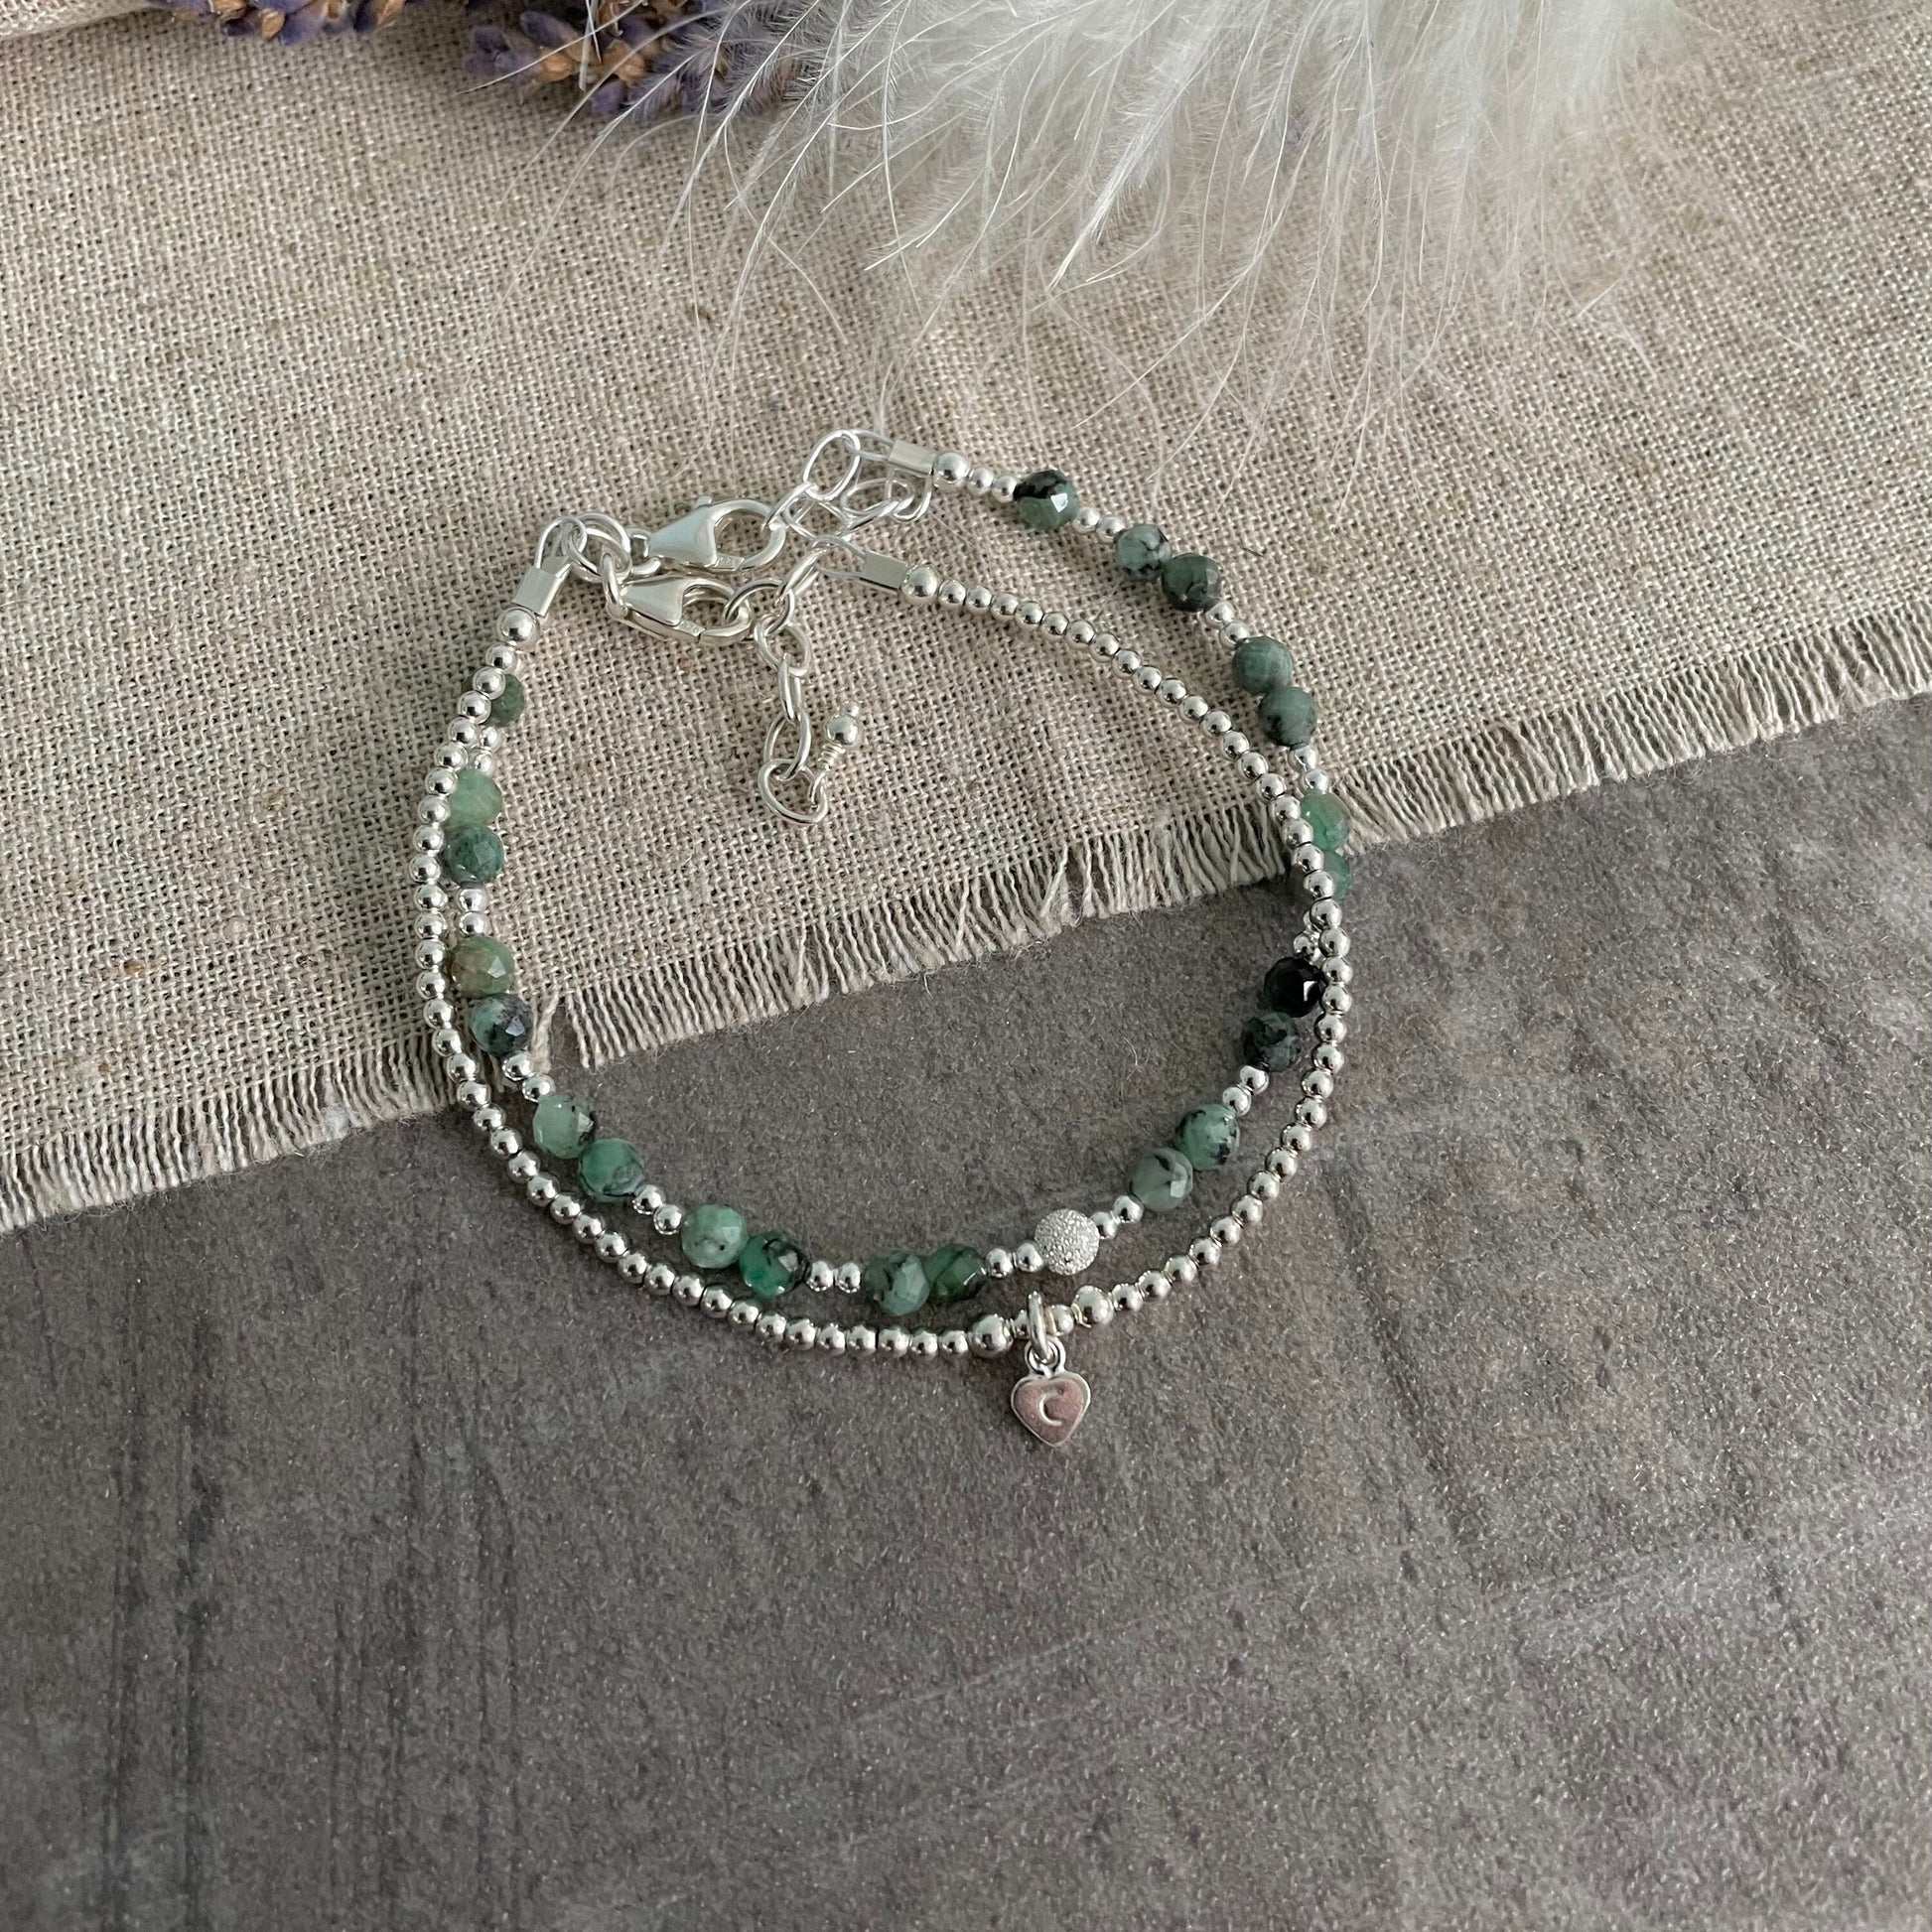 Set of 2 May Birthstone Emerald Bracelets, Stacking Bracelets for May Birthday